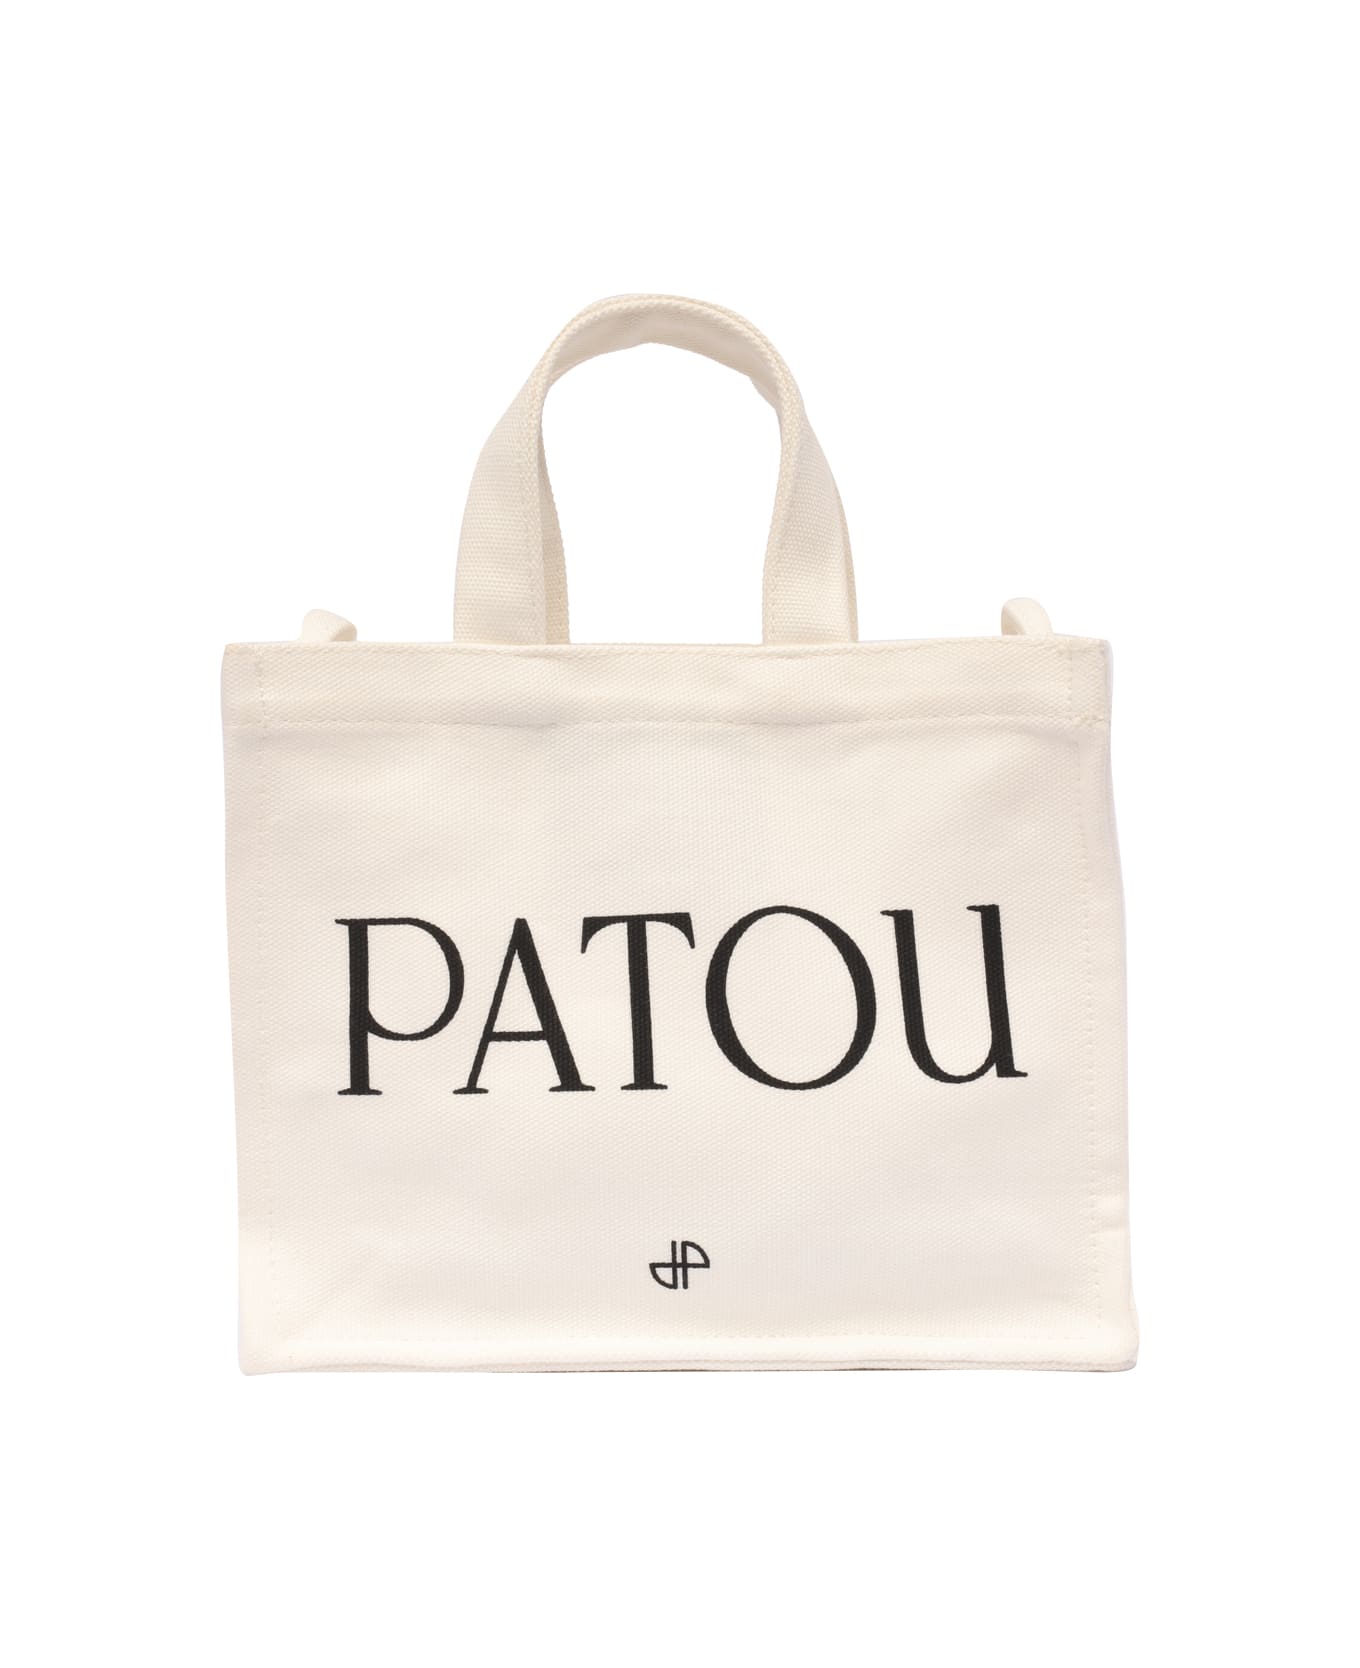 Patou Logo Tote Bag - Crema